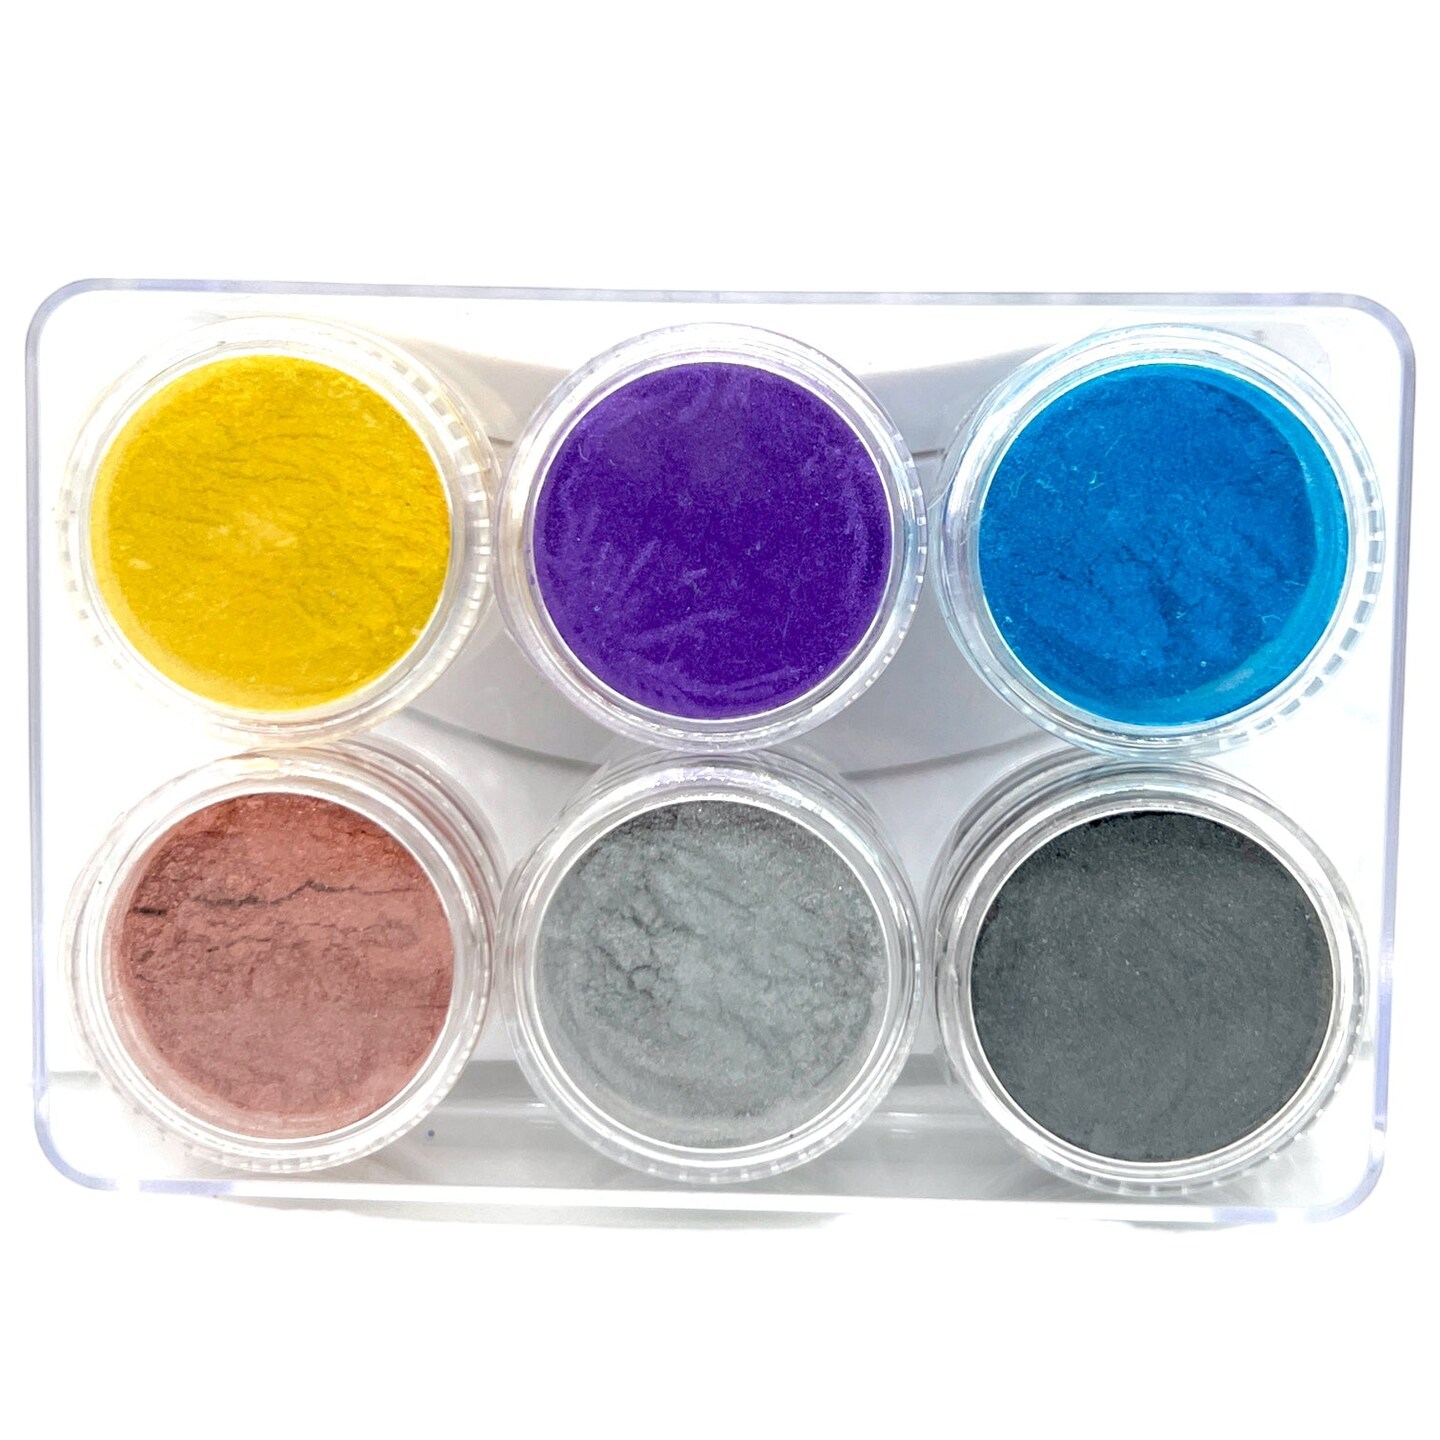 Violet Metallic Mica Pigment Powder for Epoxy Resin